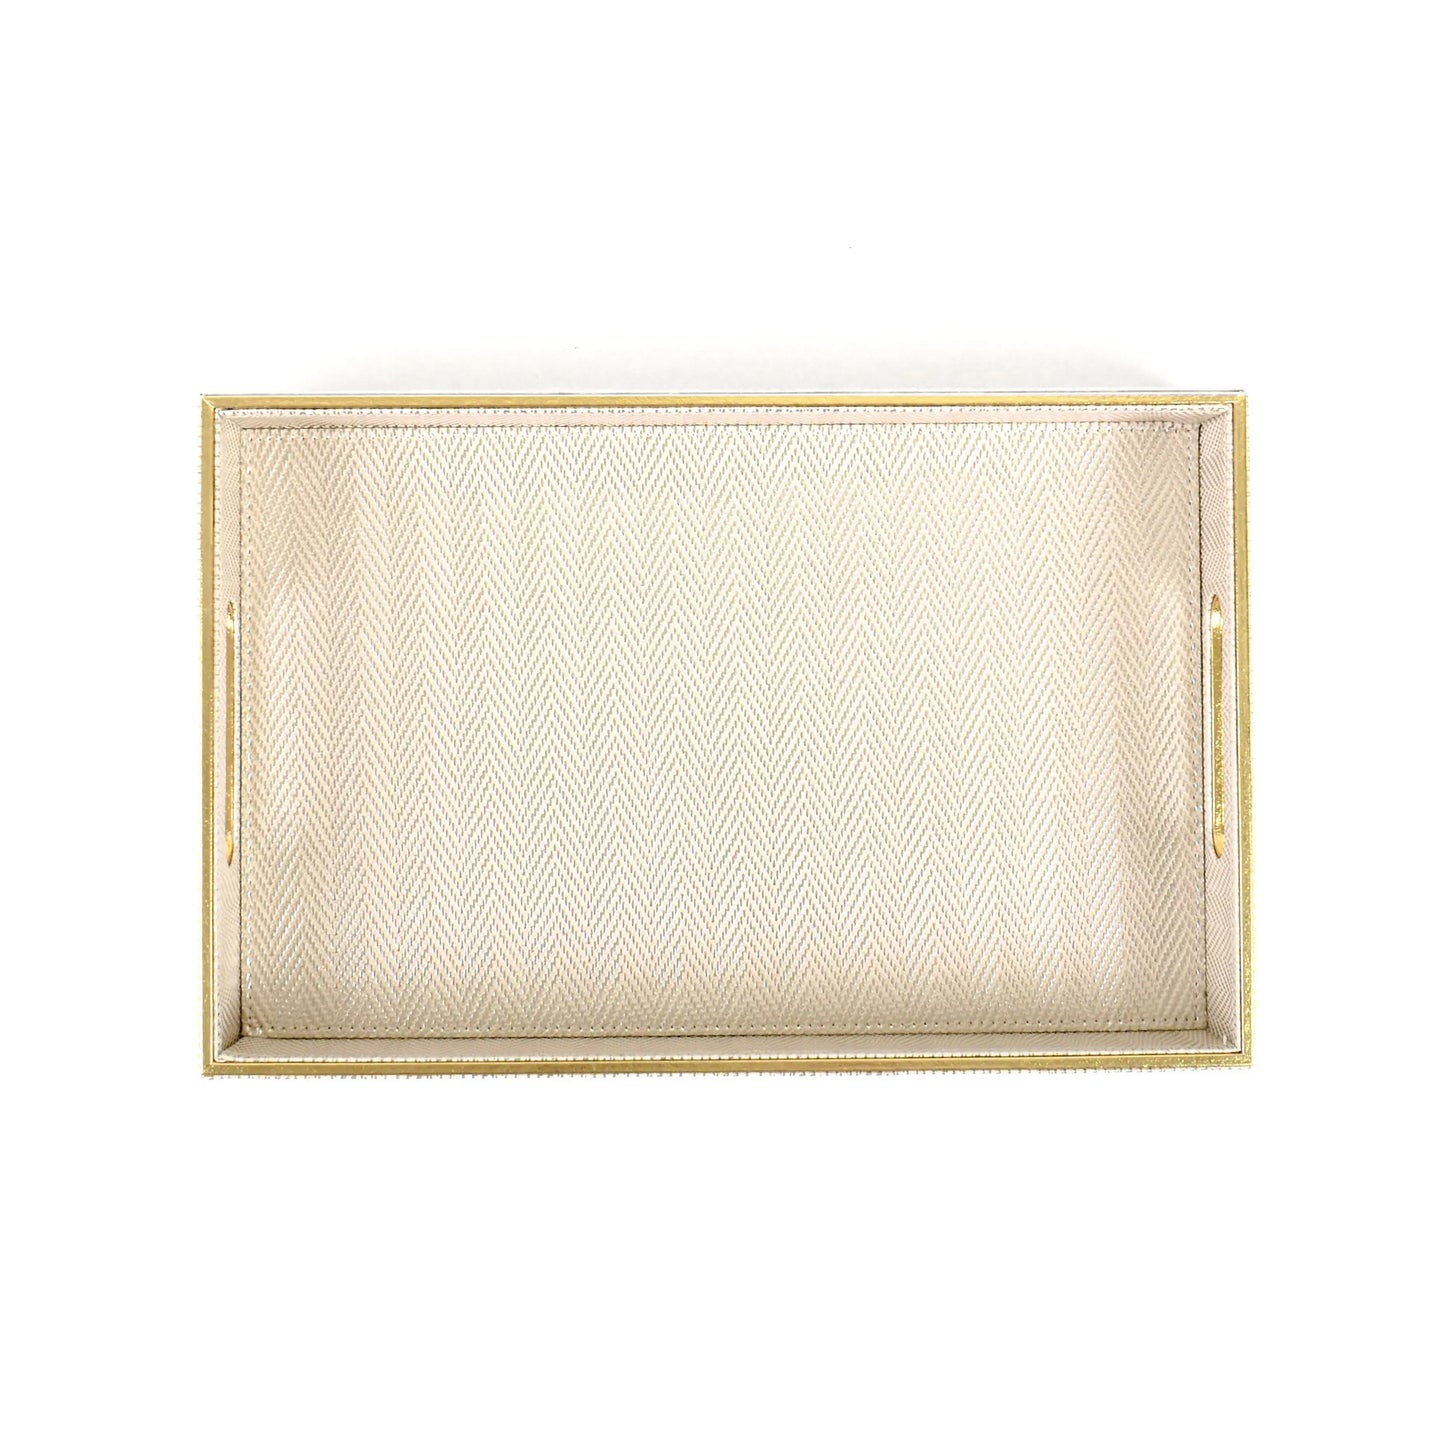 Leatherette Rectangle Serving Tray Set of 2 | White Gold | Hamilton Ichkan